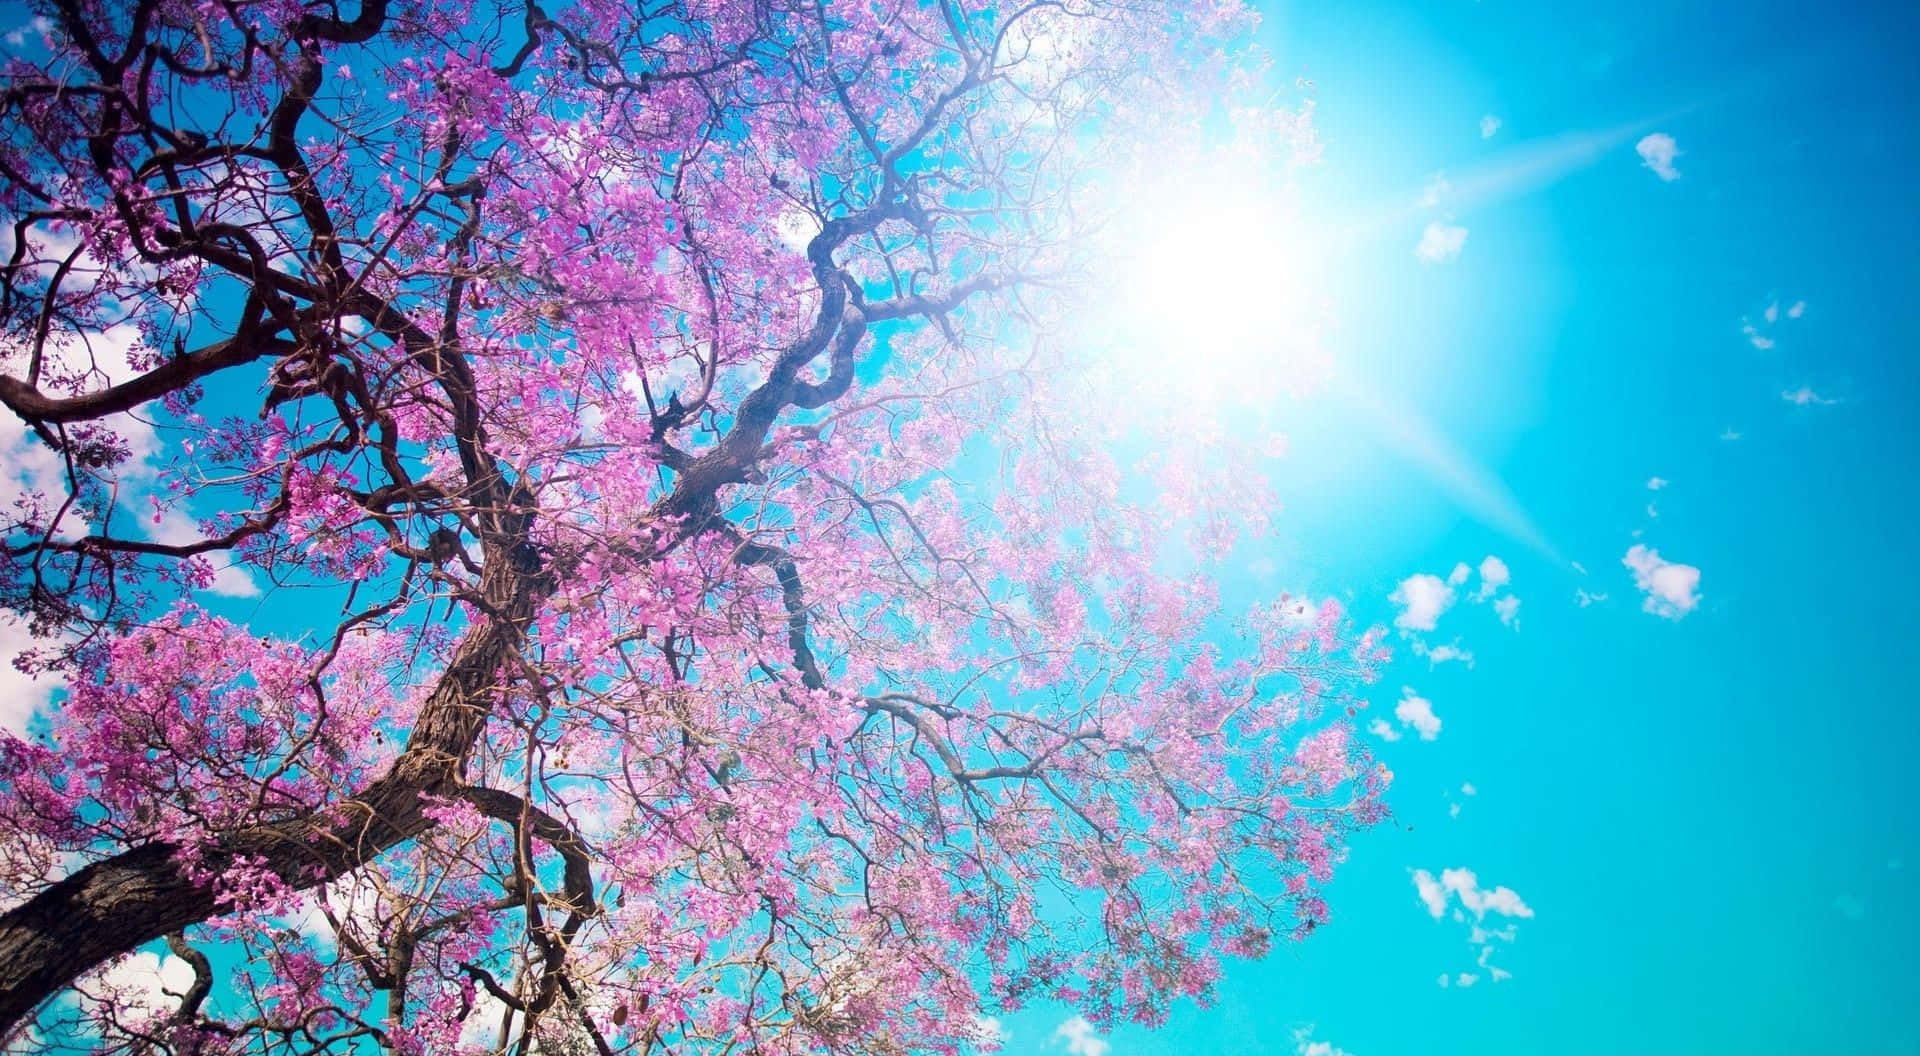 Vibrant Spring Sunshine in Nature Wallpaper